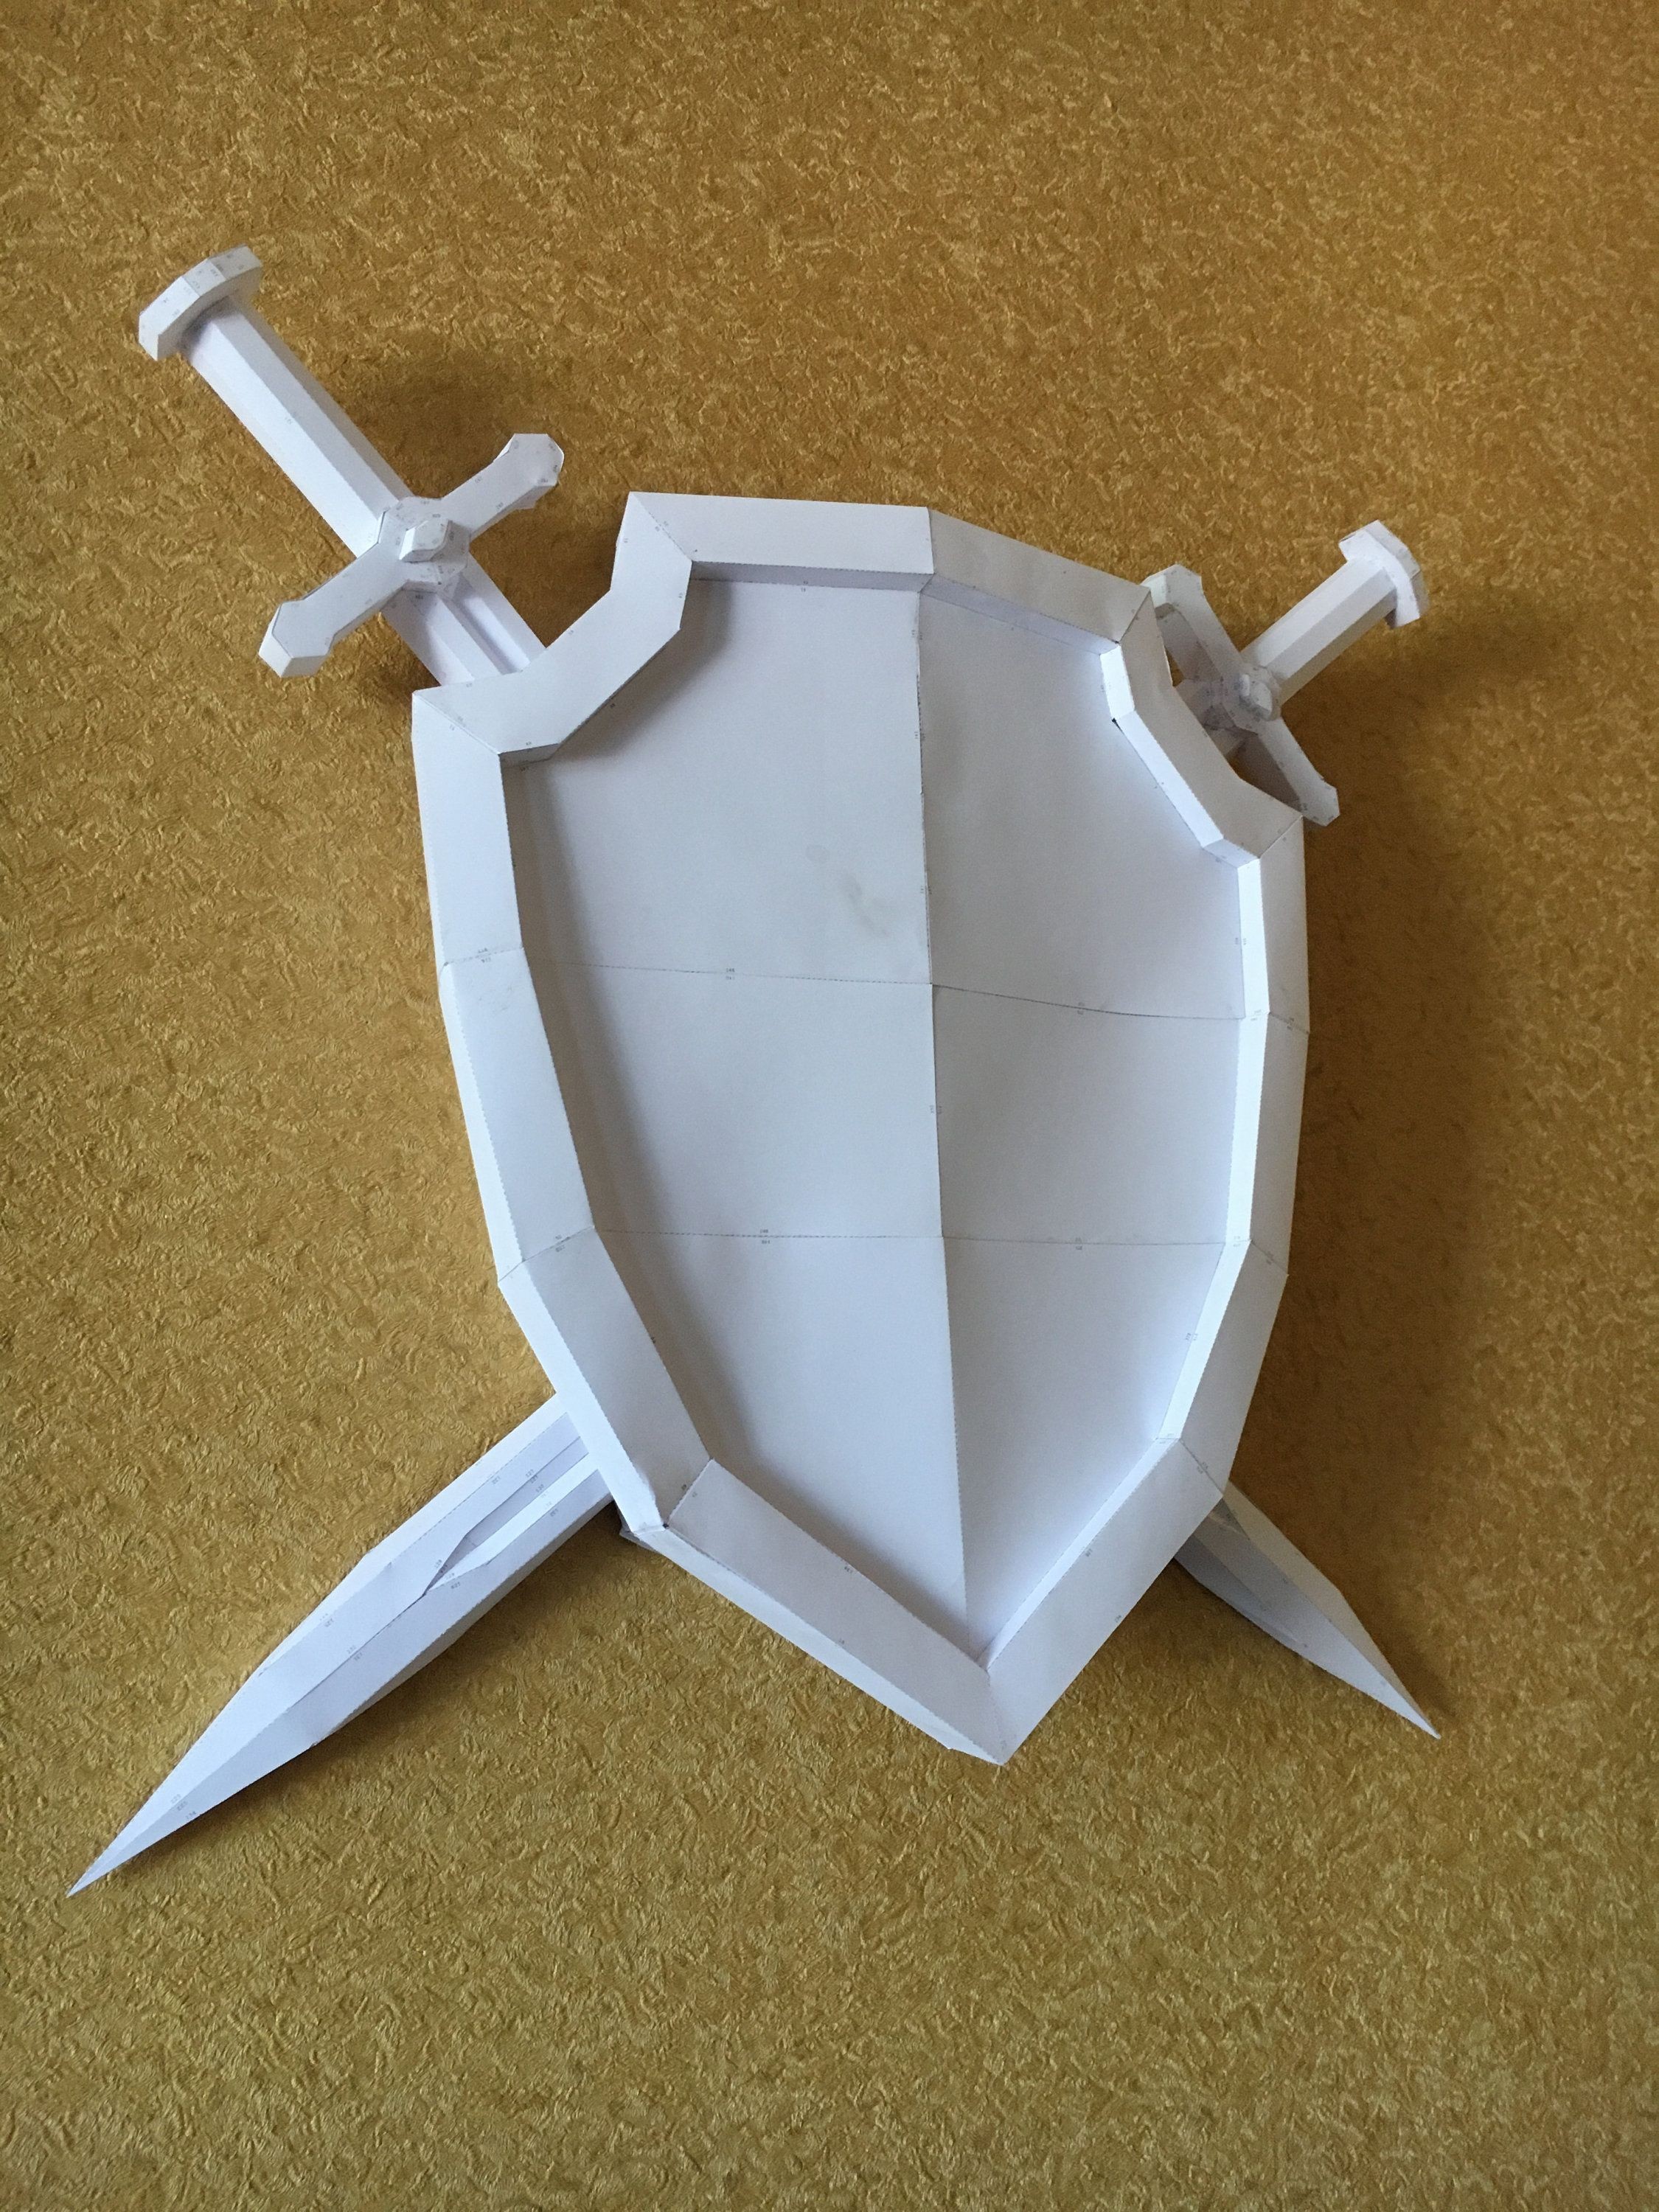 Papercraft Monsters Sword Shield Diy Papercraft Model ÐÑÐ¼Ð°Ð¶Ð½ÑÐµ Ð¸Ð·Ð´ÐµÐ Ð¸Ñ